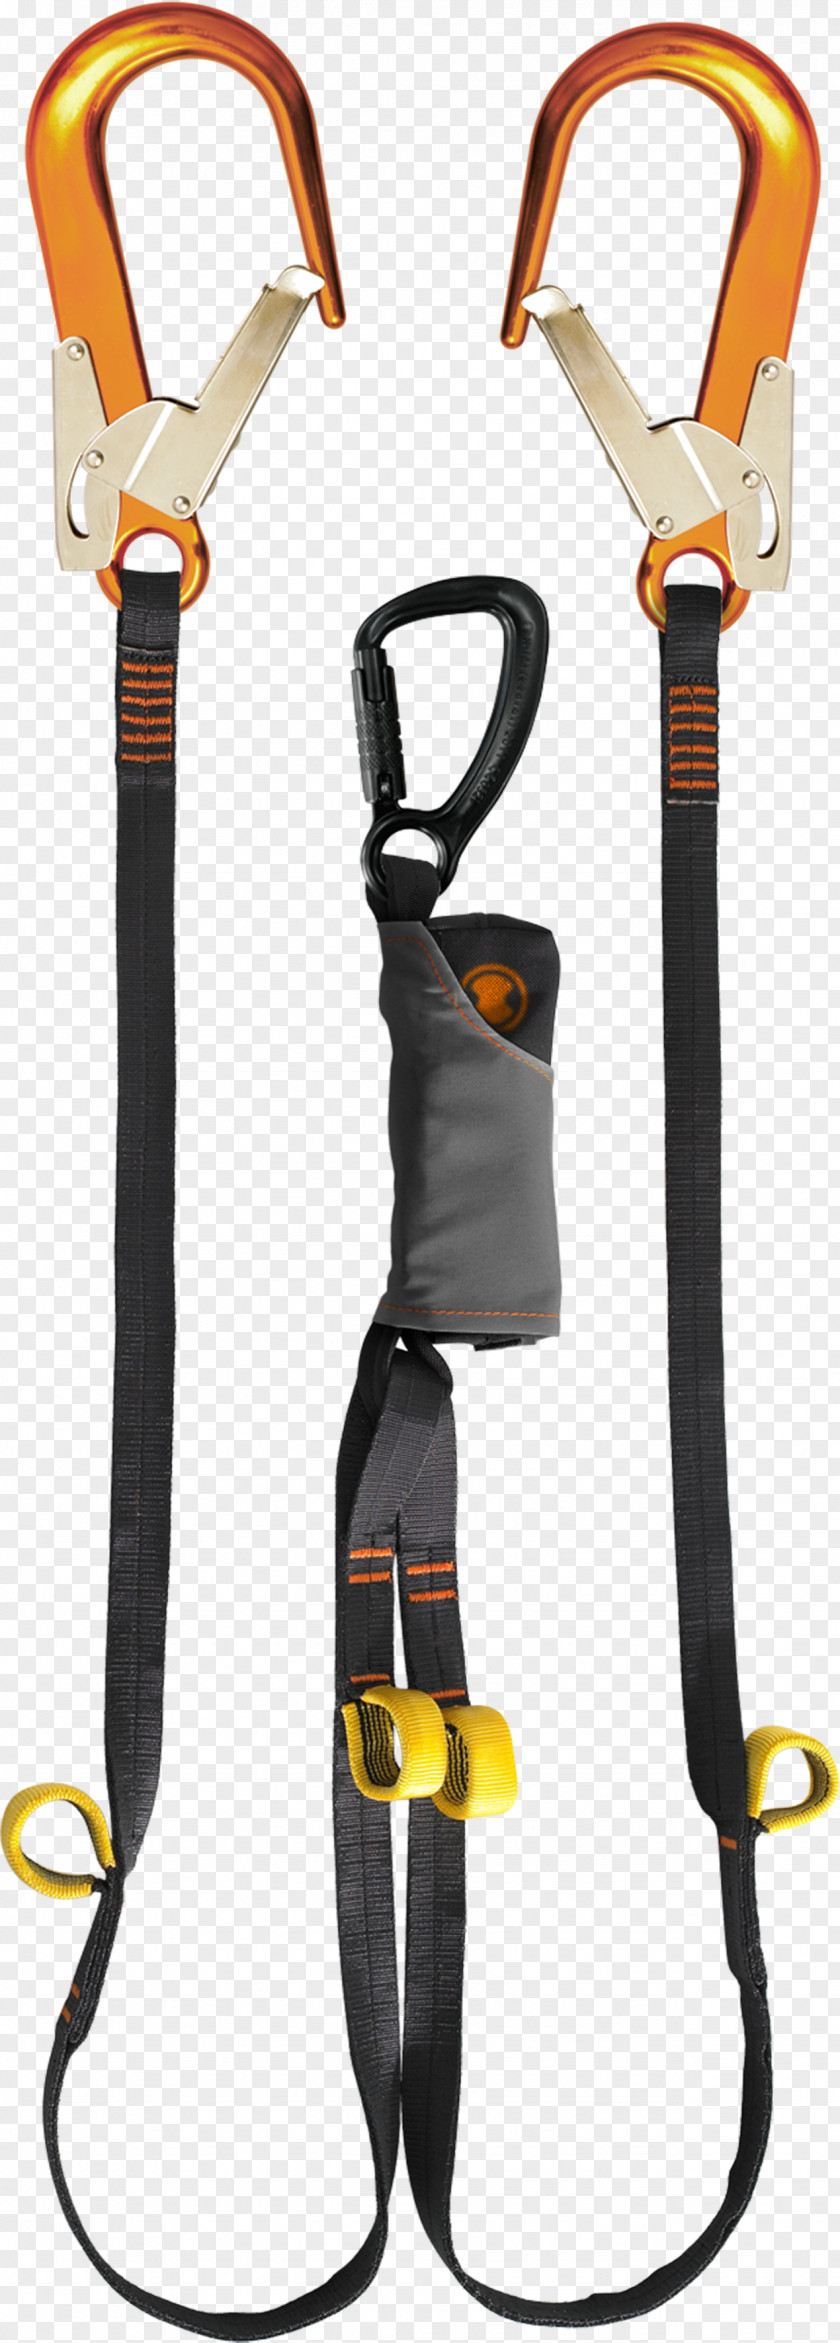 Tieback SKYLOTEC Absobeur D'énergie I-Flexband FS 90 Alu/Stak Tri Alu Climbing Harnesses Material Safety Harness PNG